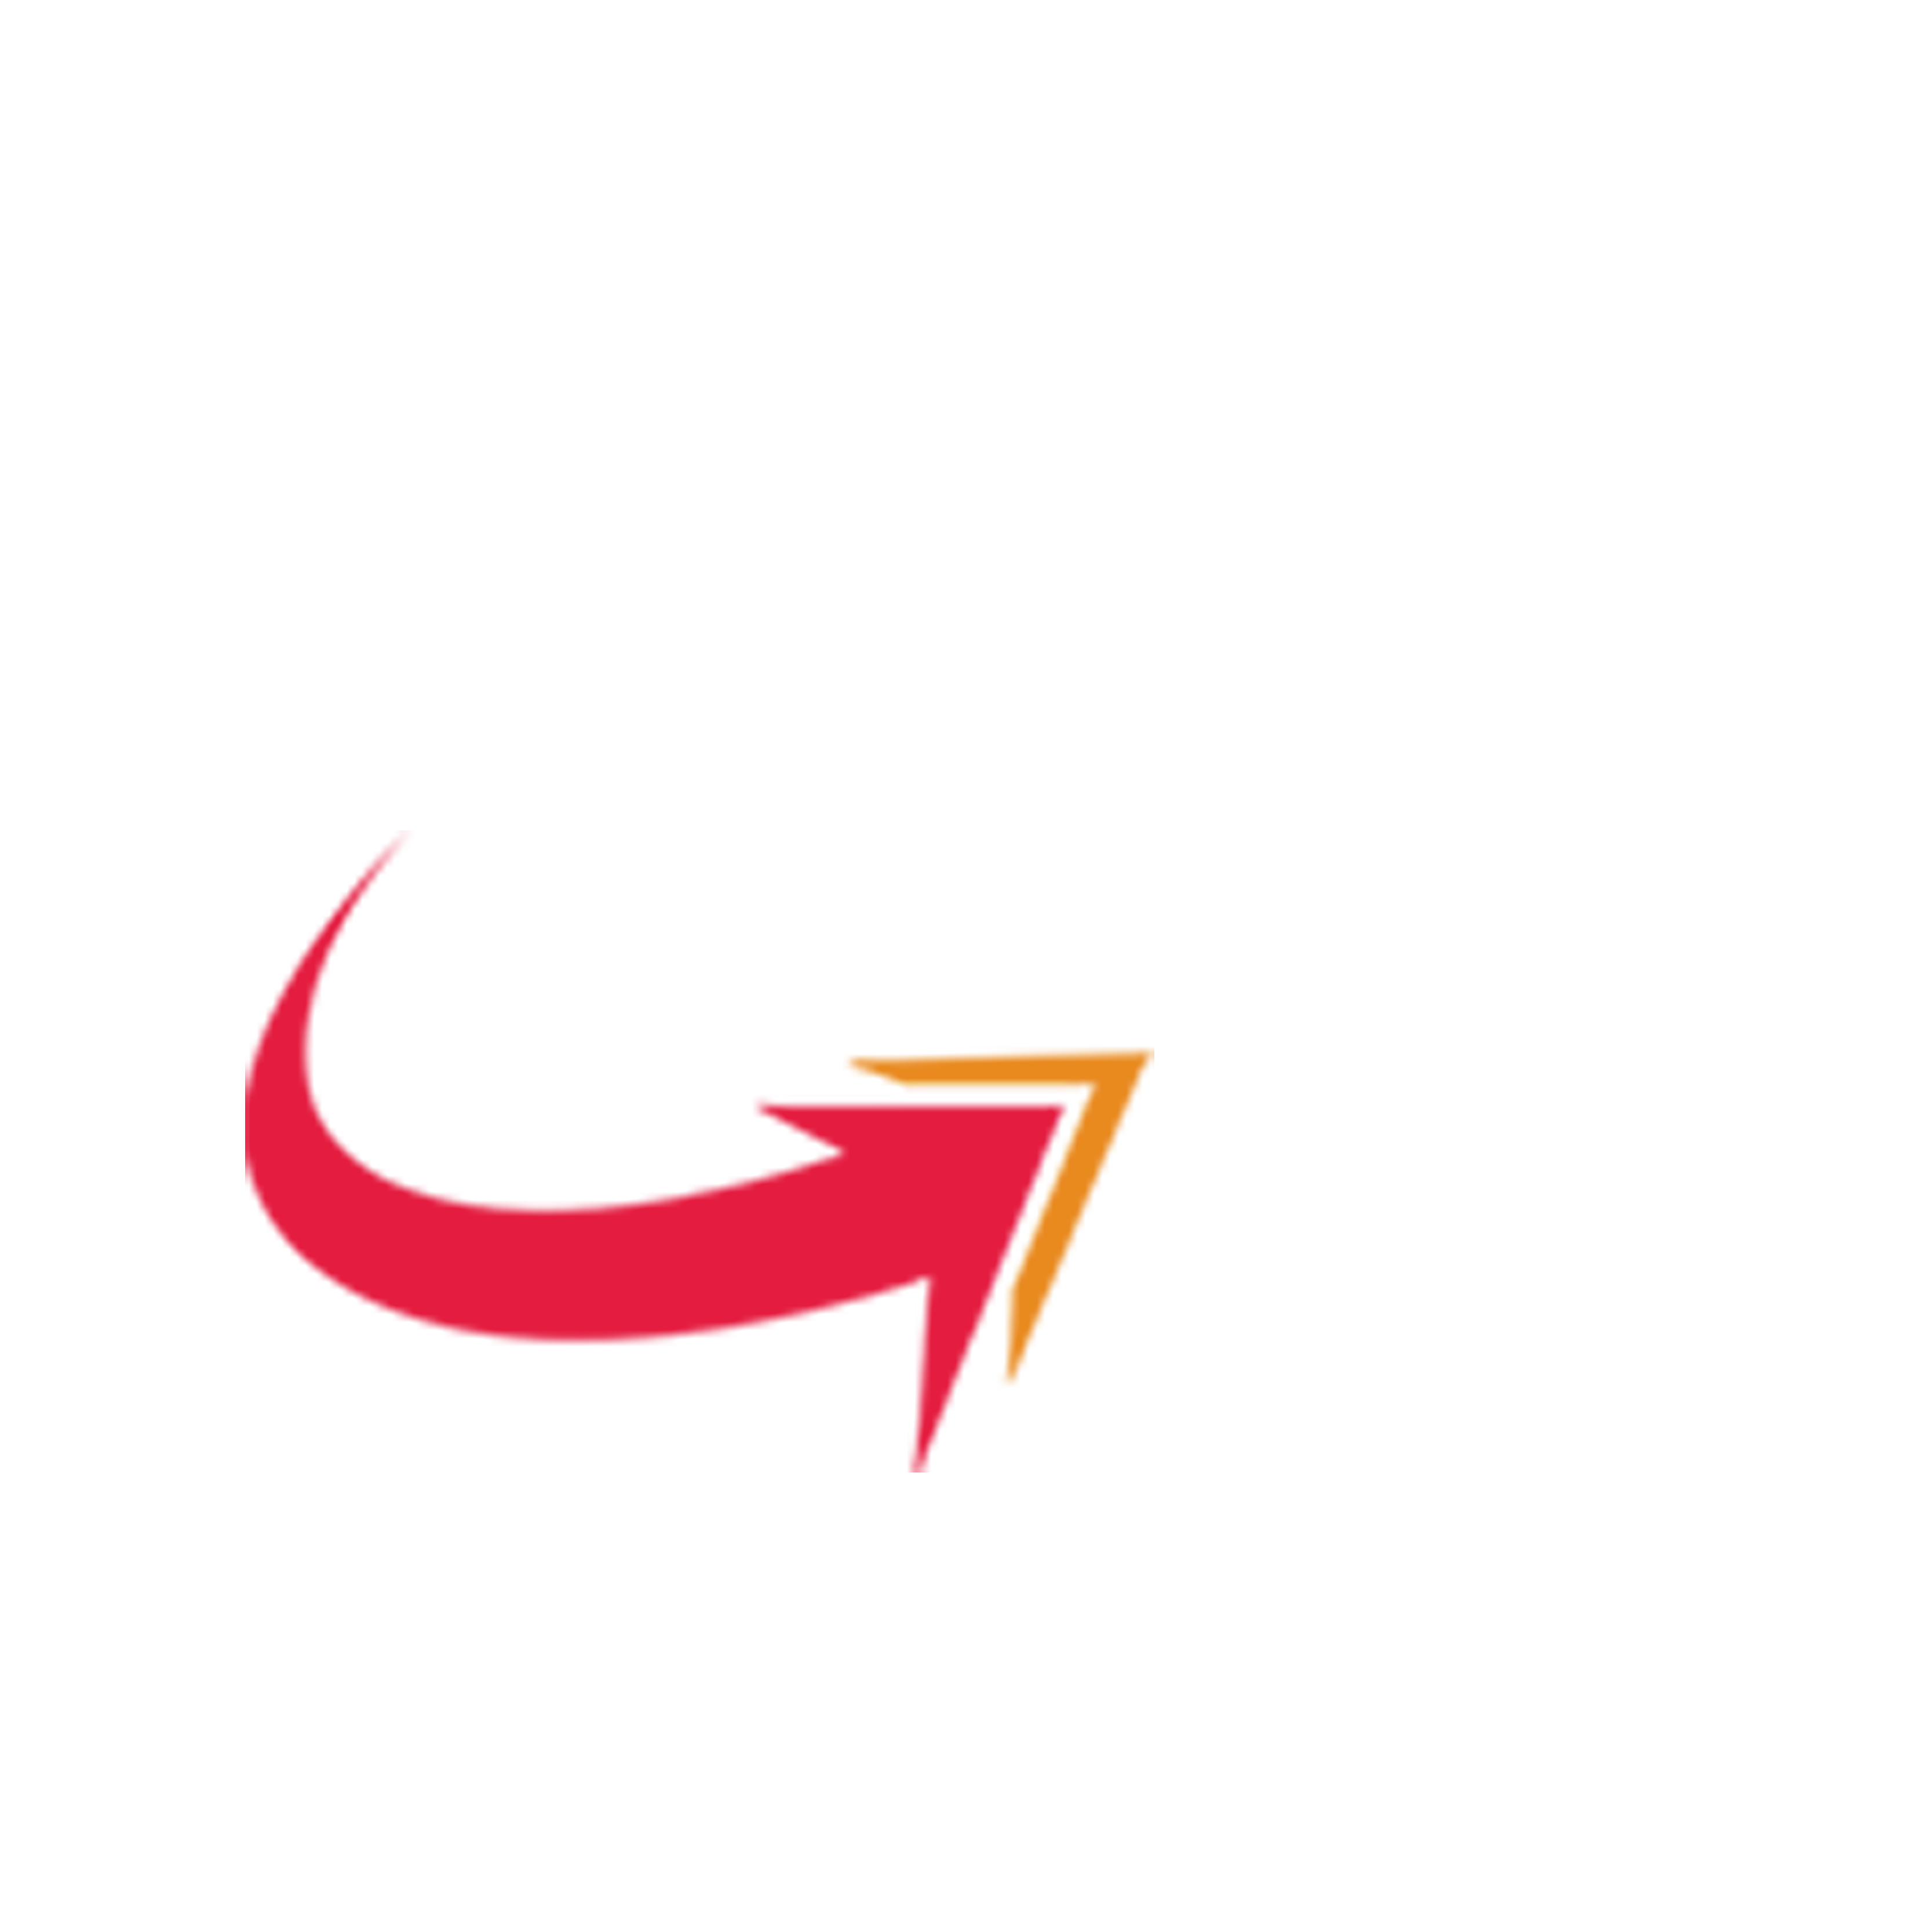 shaQ Express